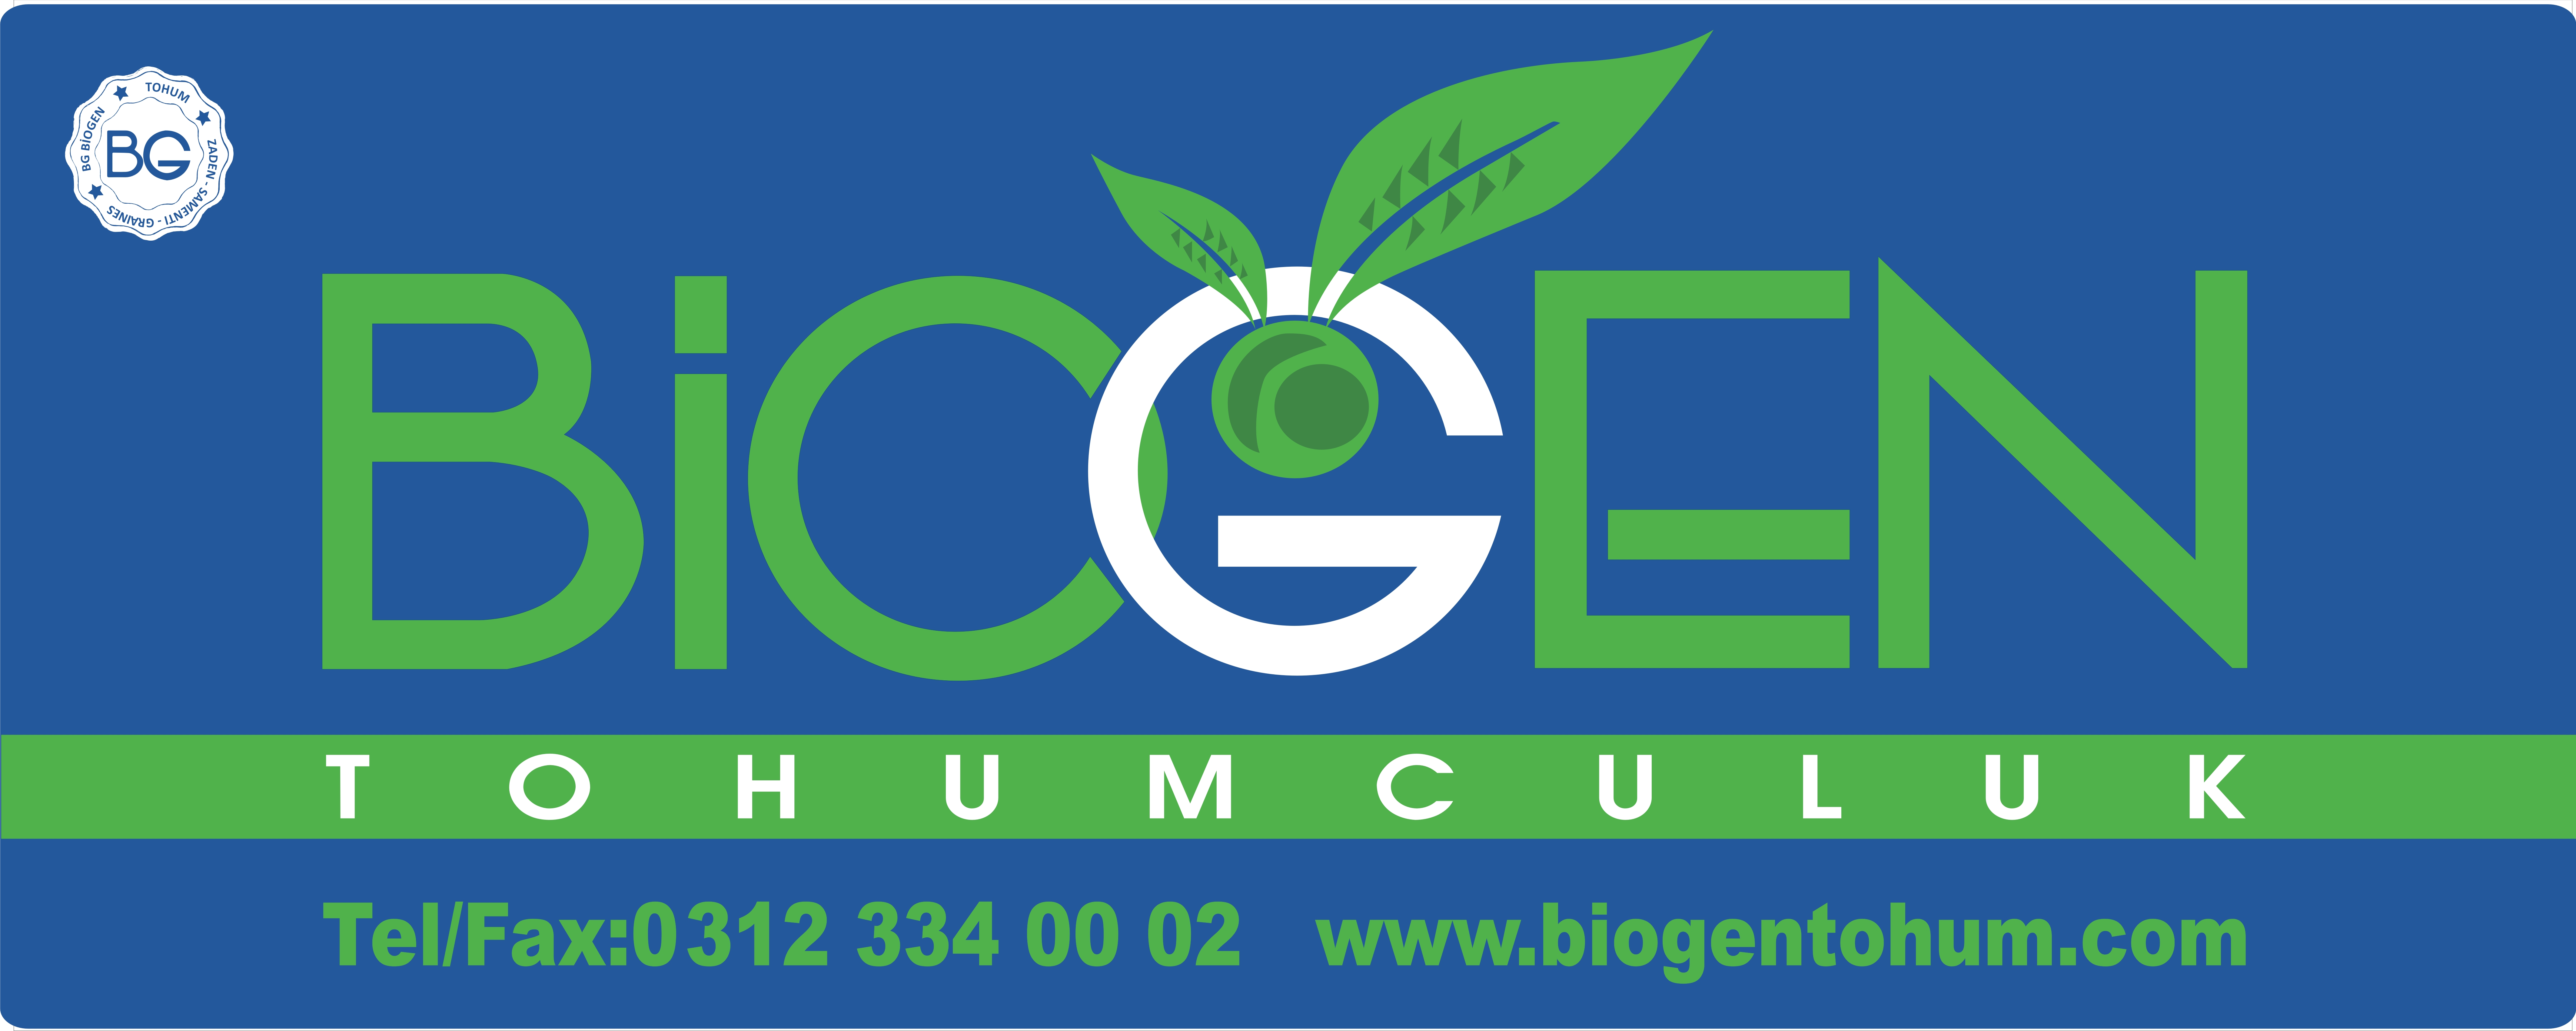 Biogen Tohumculuk